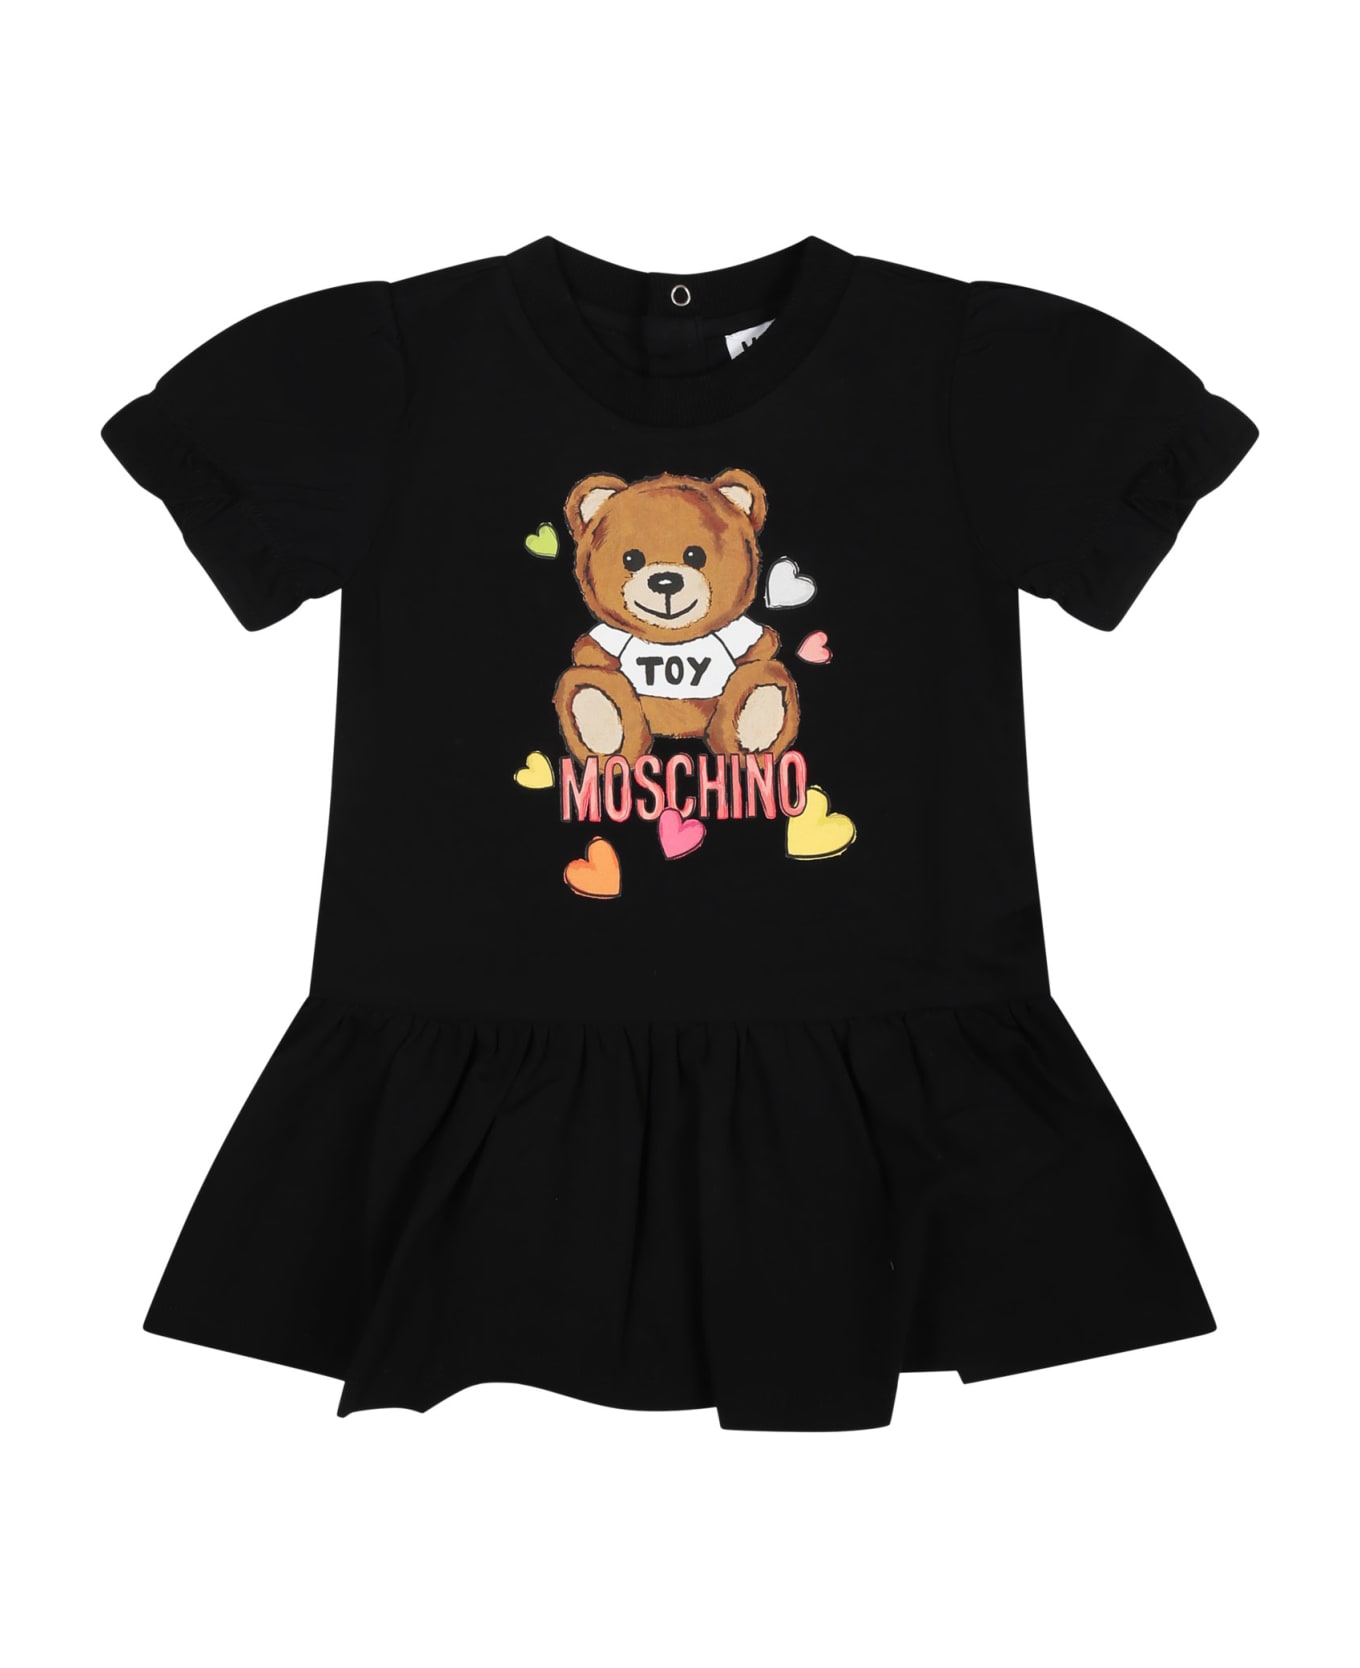 Moschino Black Dress For Baby Girl With Teddy Bear Print - Black ウェア